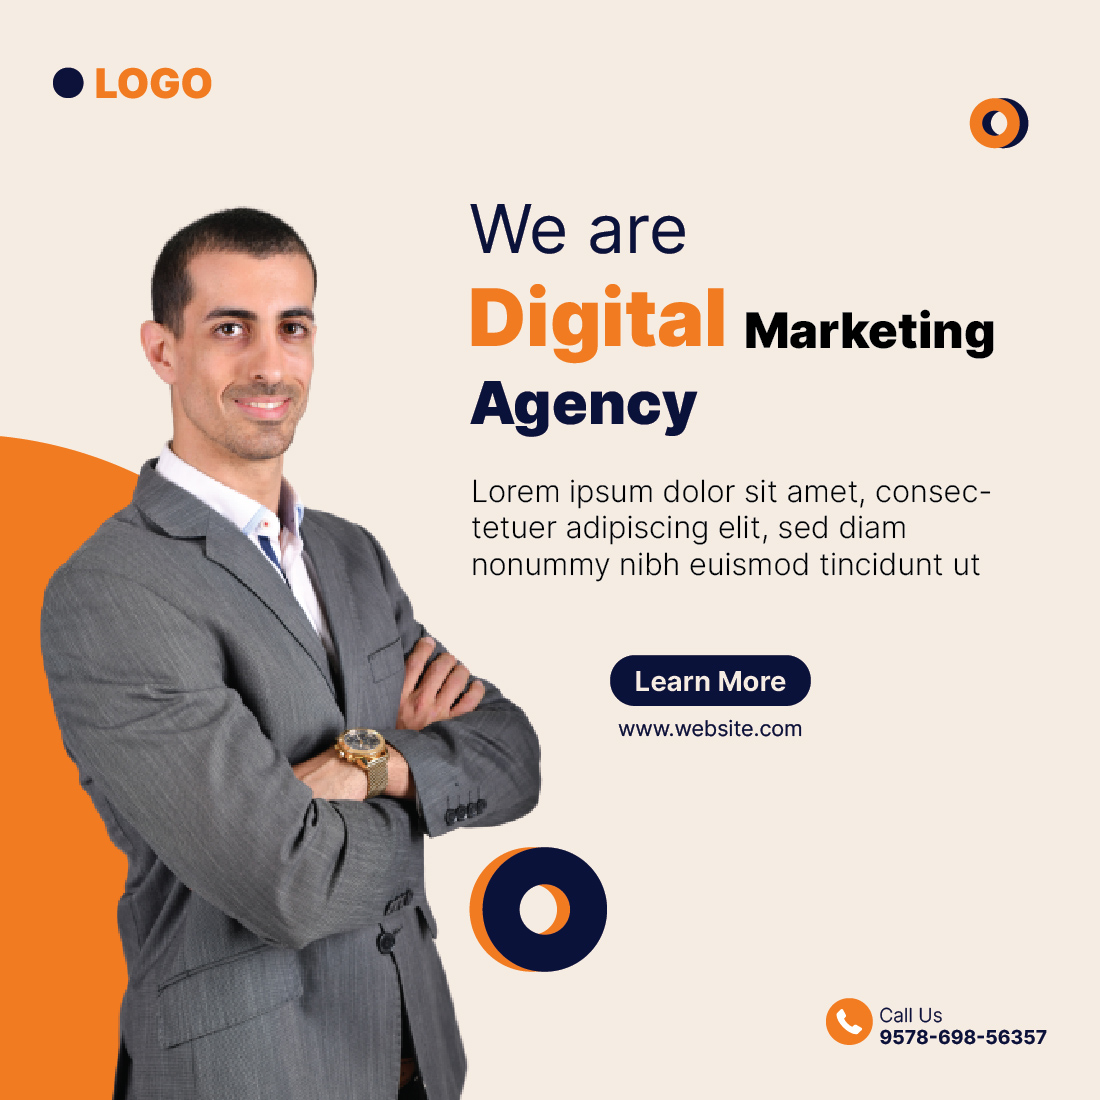 Digital Marketing Agency and Corporate vector Social media post